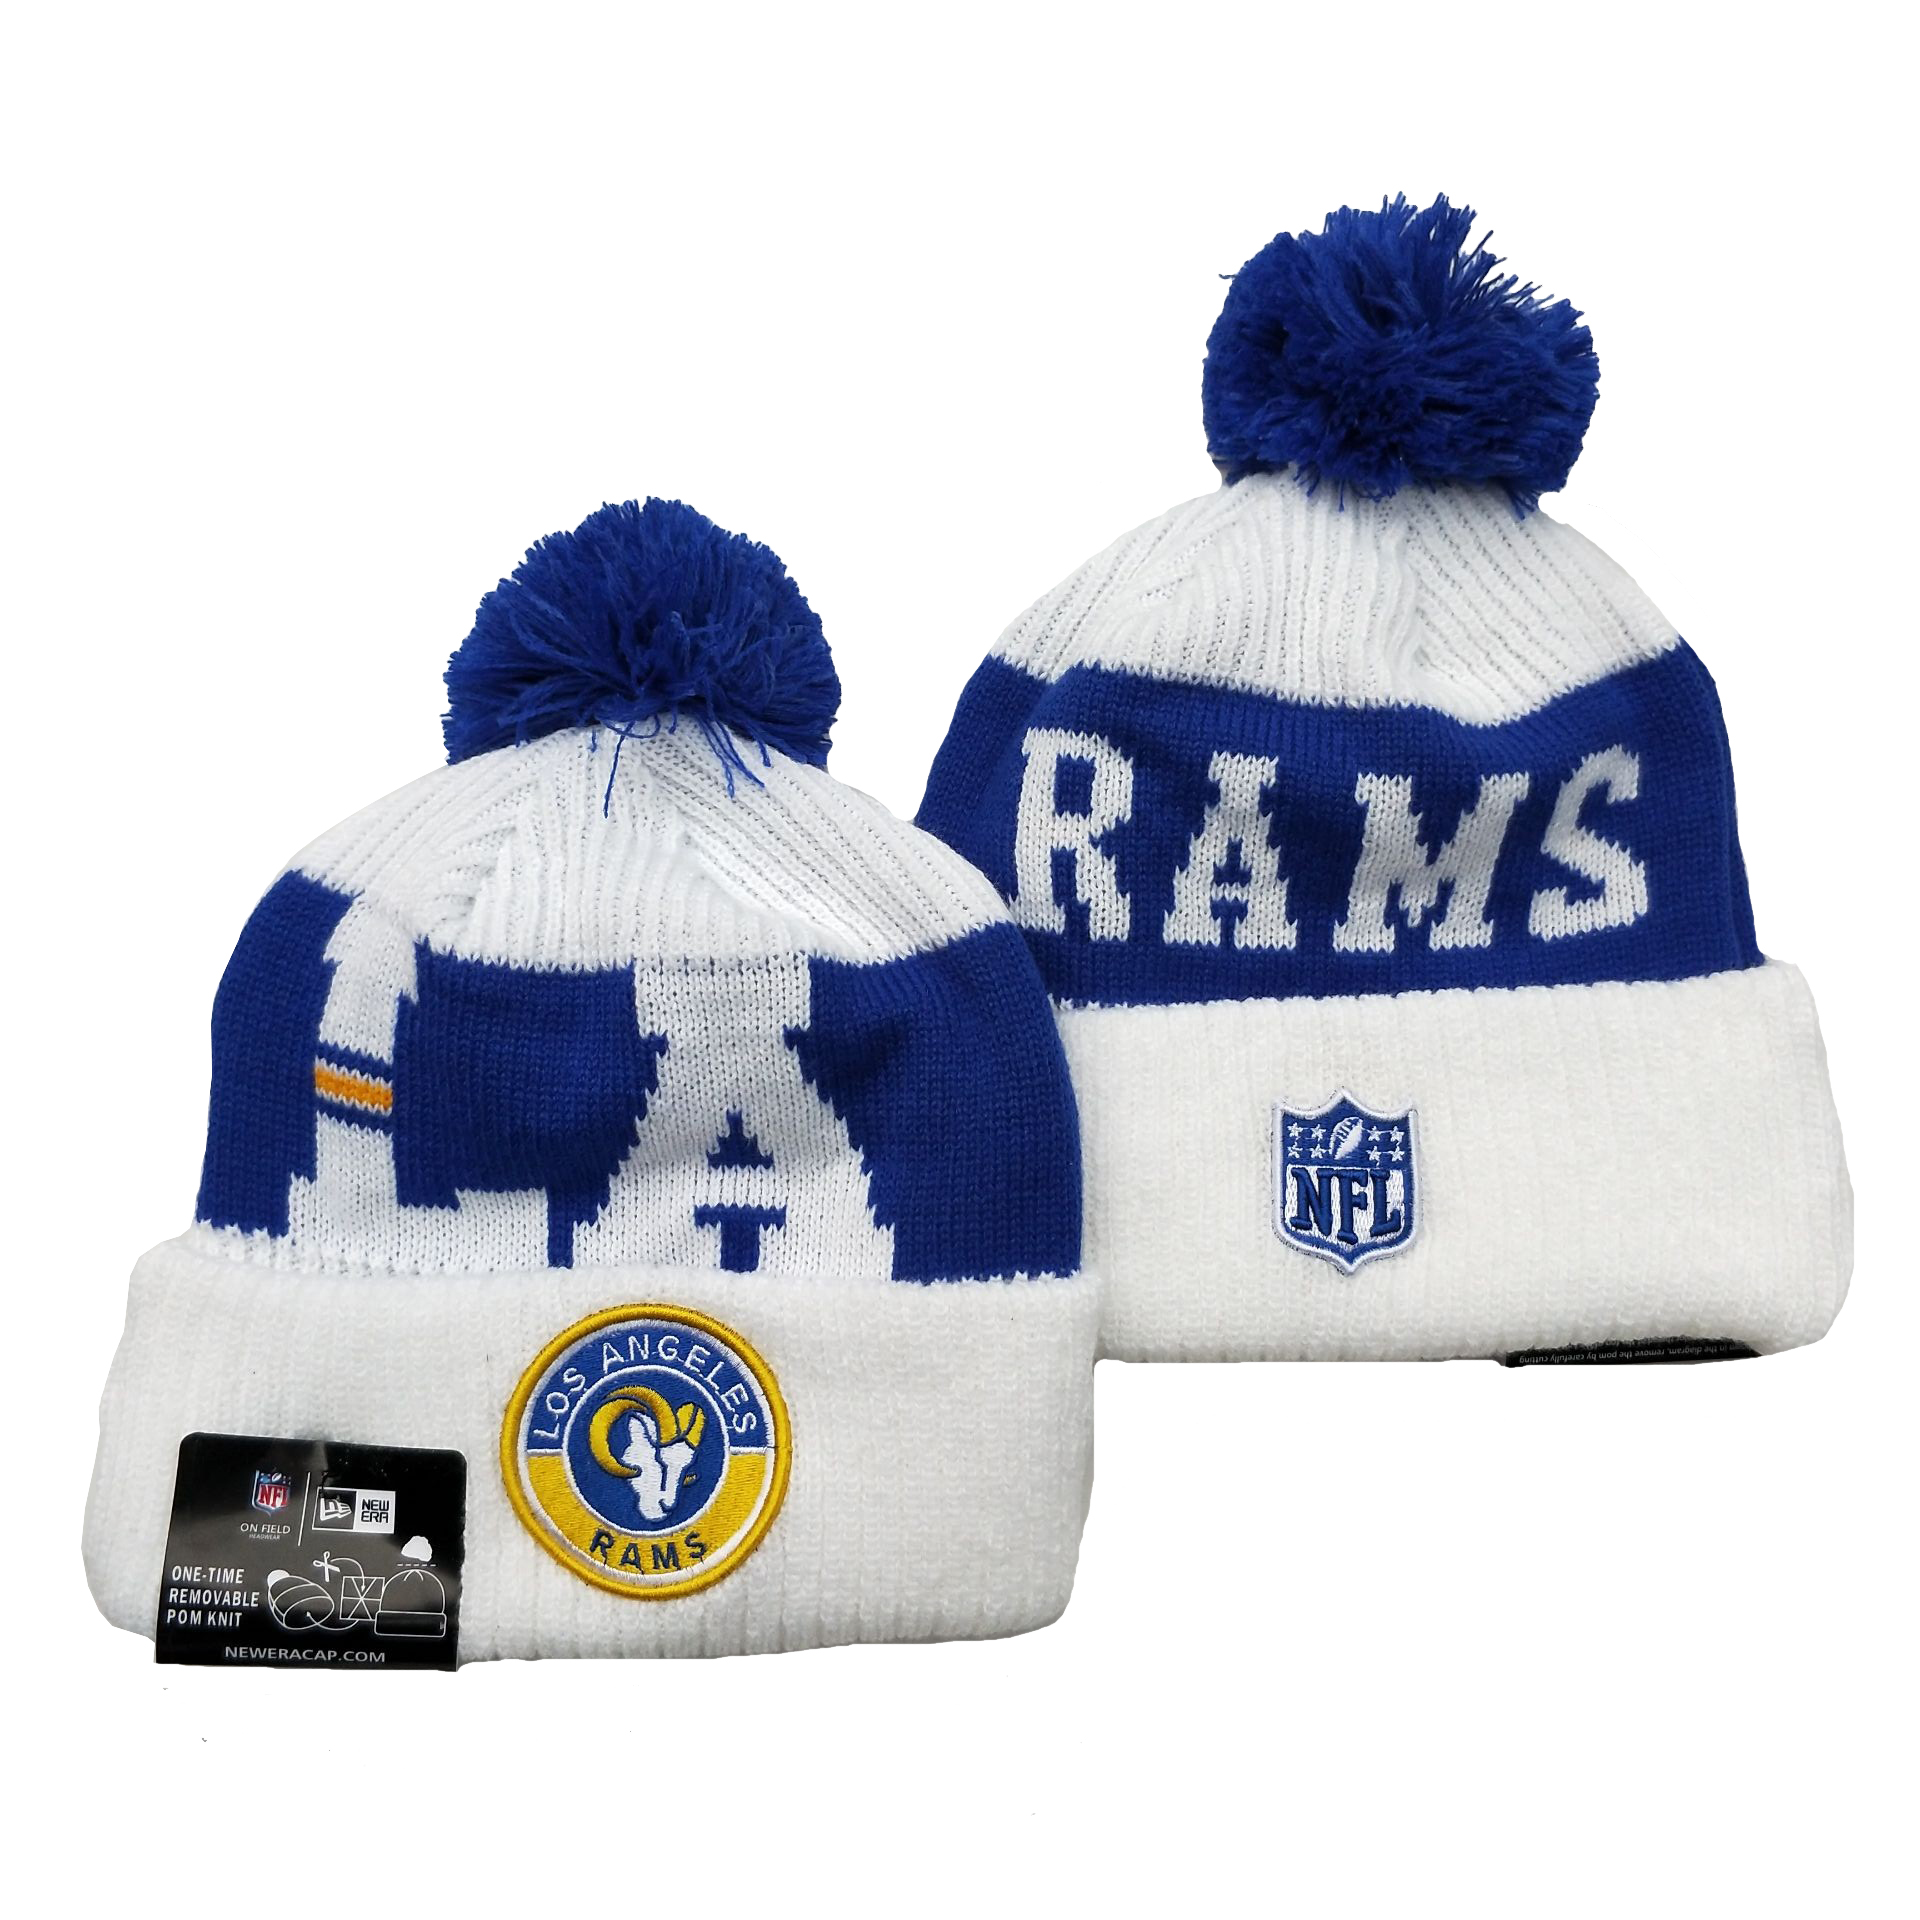 Los Angeles Rams Knit Hats 063